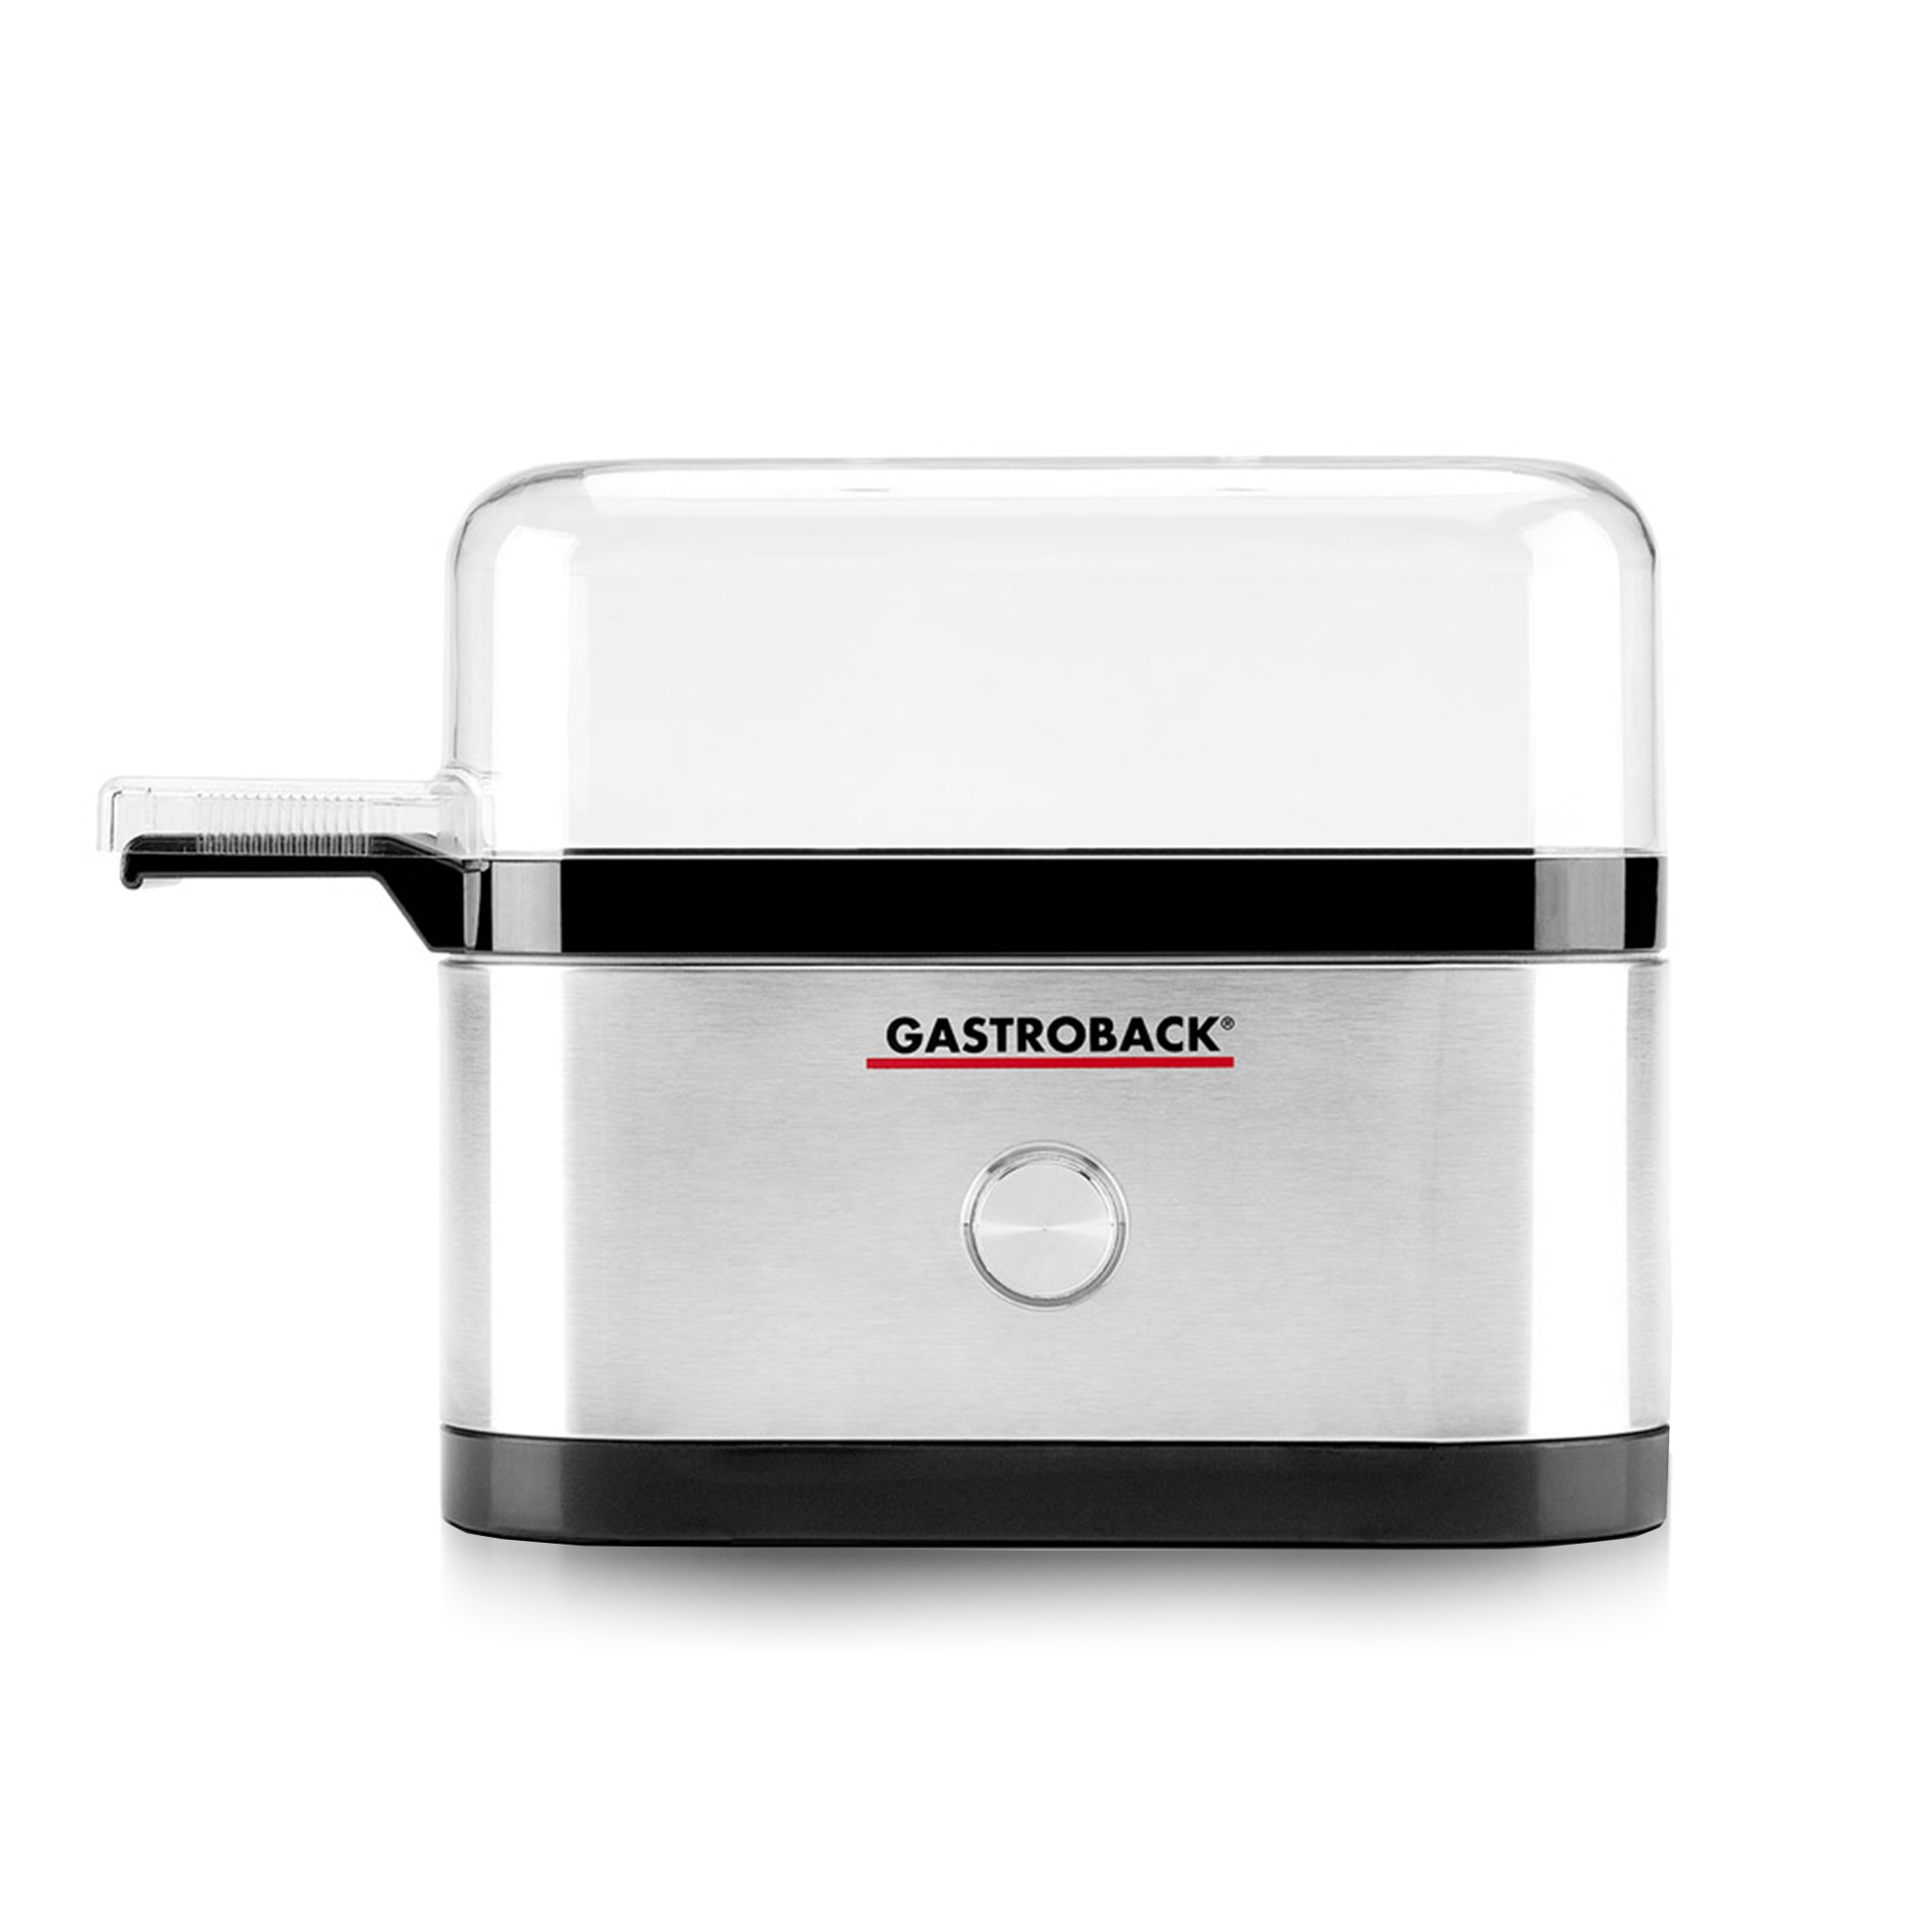 Gastroback - Egg cooker Design mini